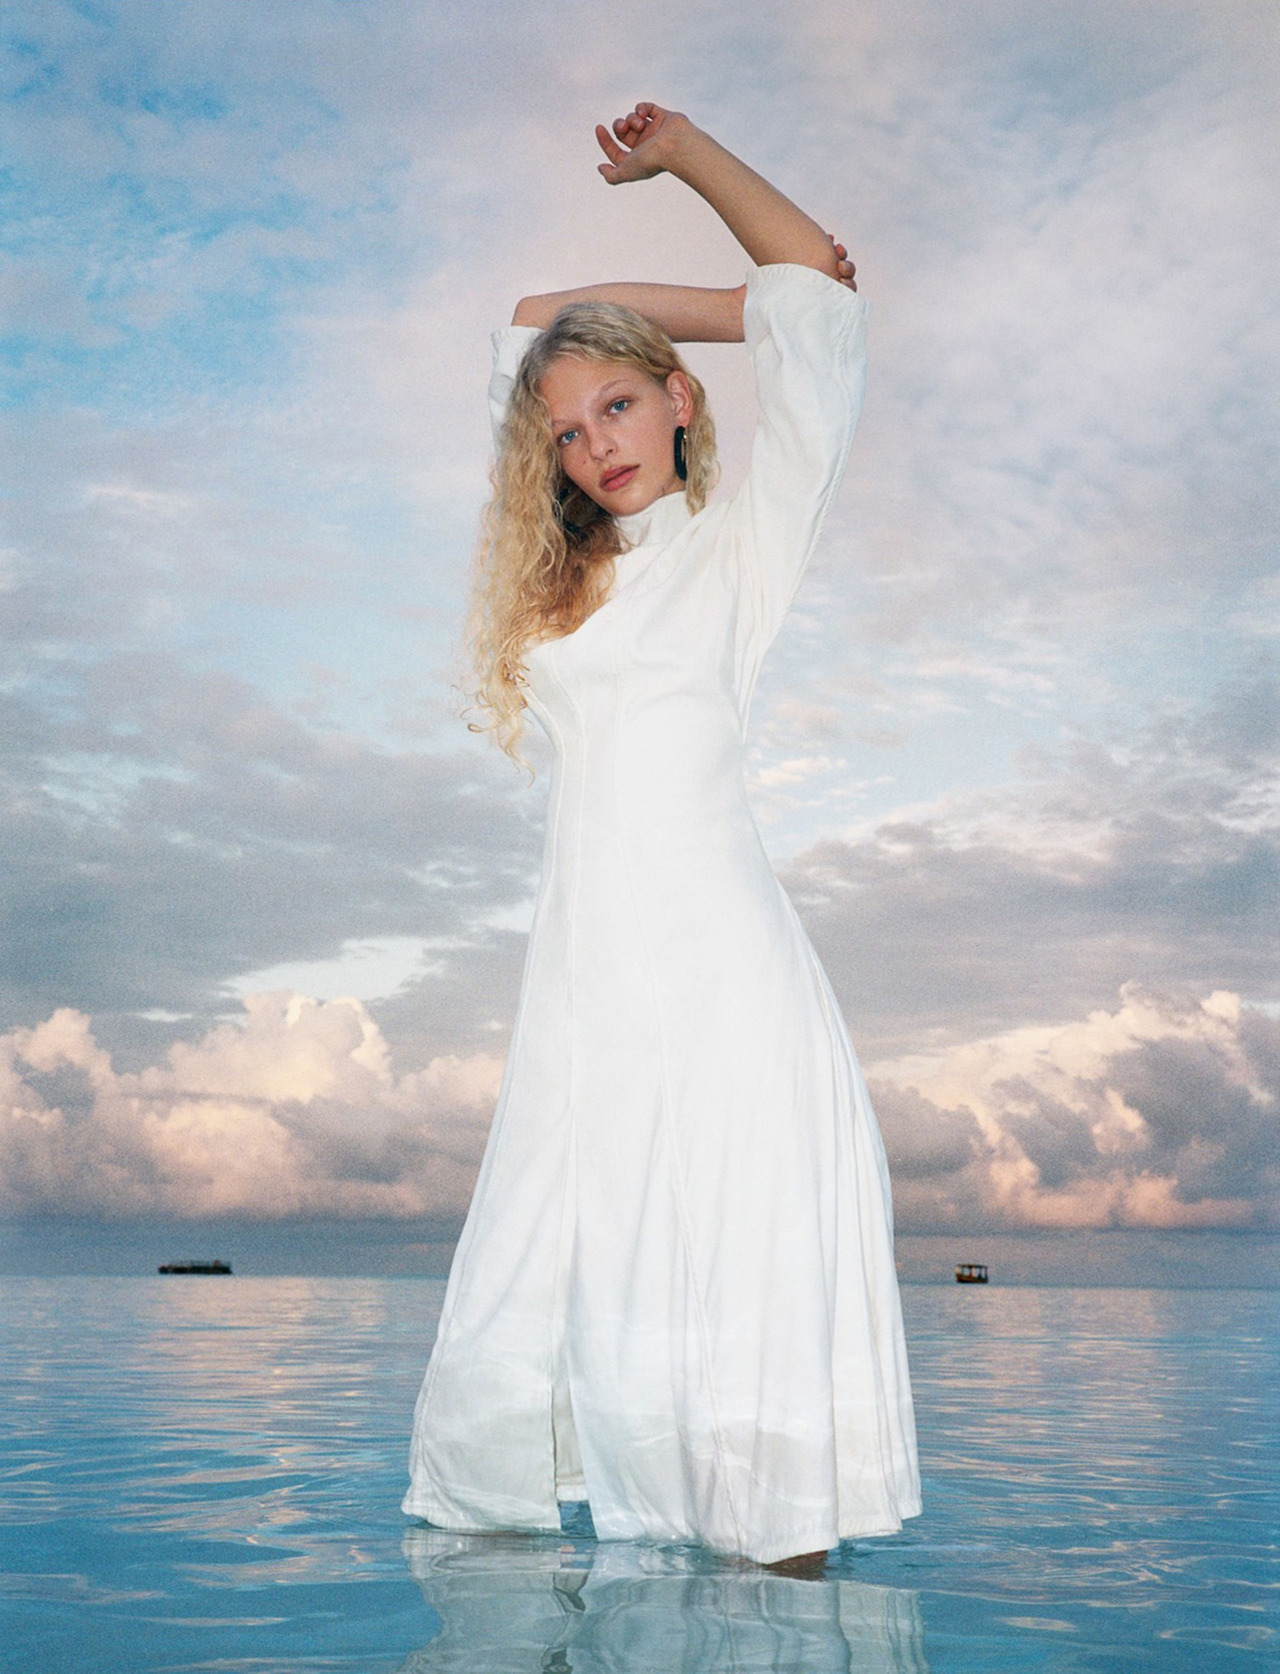 Frederikke Sofie by Tyrone Lebon for Vogue UK—February 2016—cotton satin dress